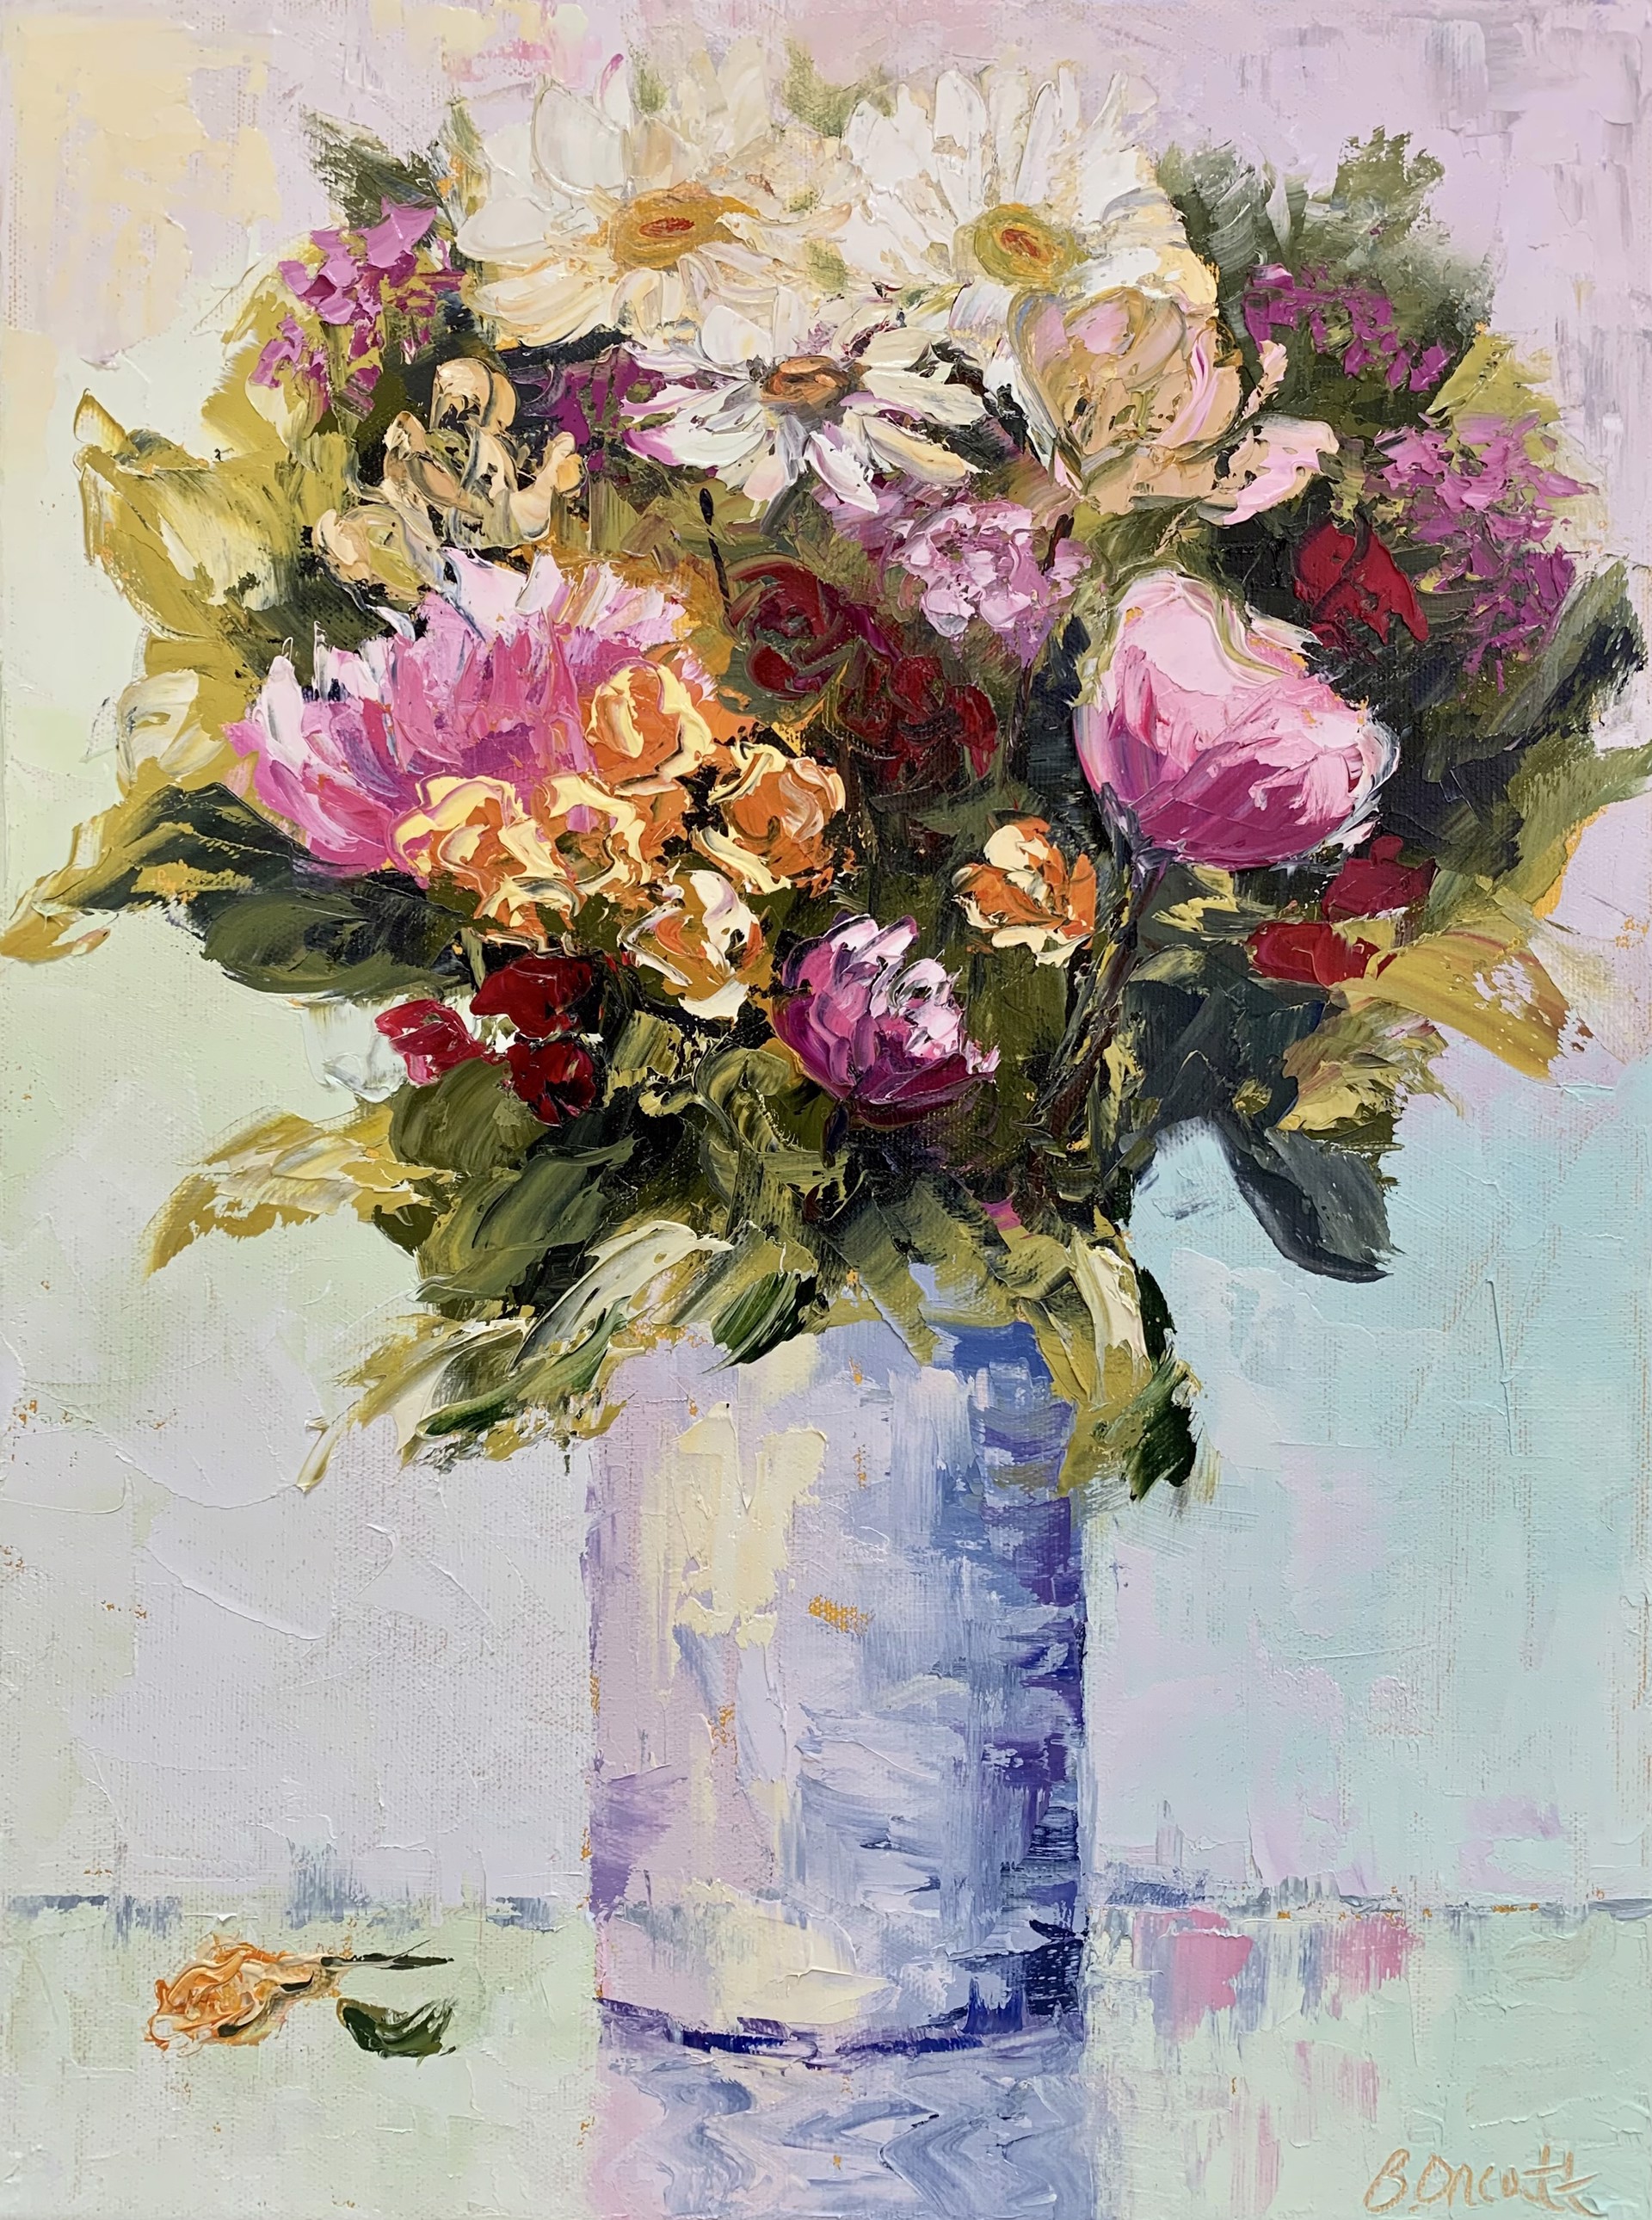 Flowers of Love by Brenda Orcutt